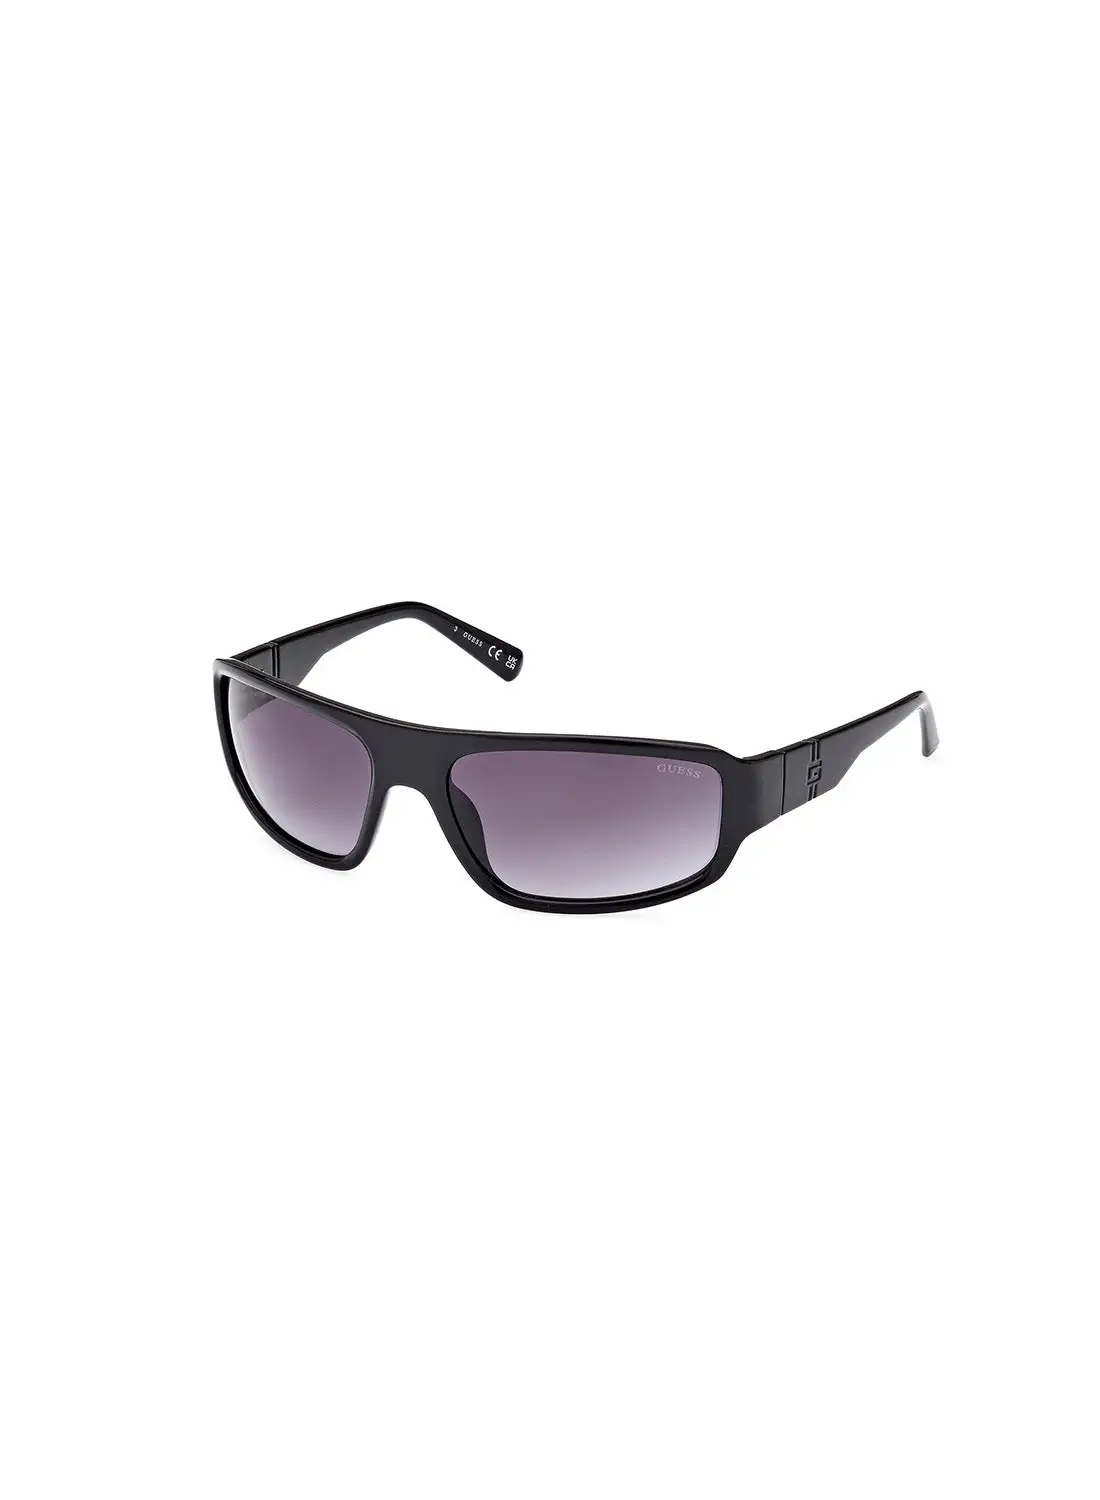 GUESS Men's UV Protection Rectangular Sunglasses - GU0008001B62 - Lens Size: 62 Mm